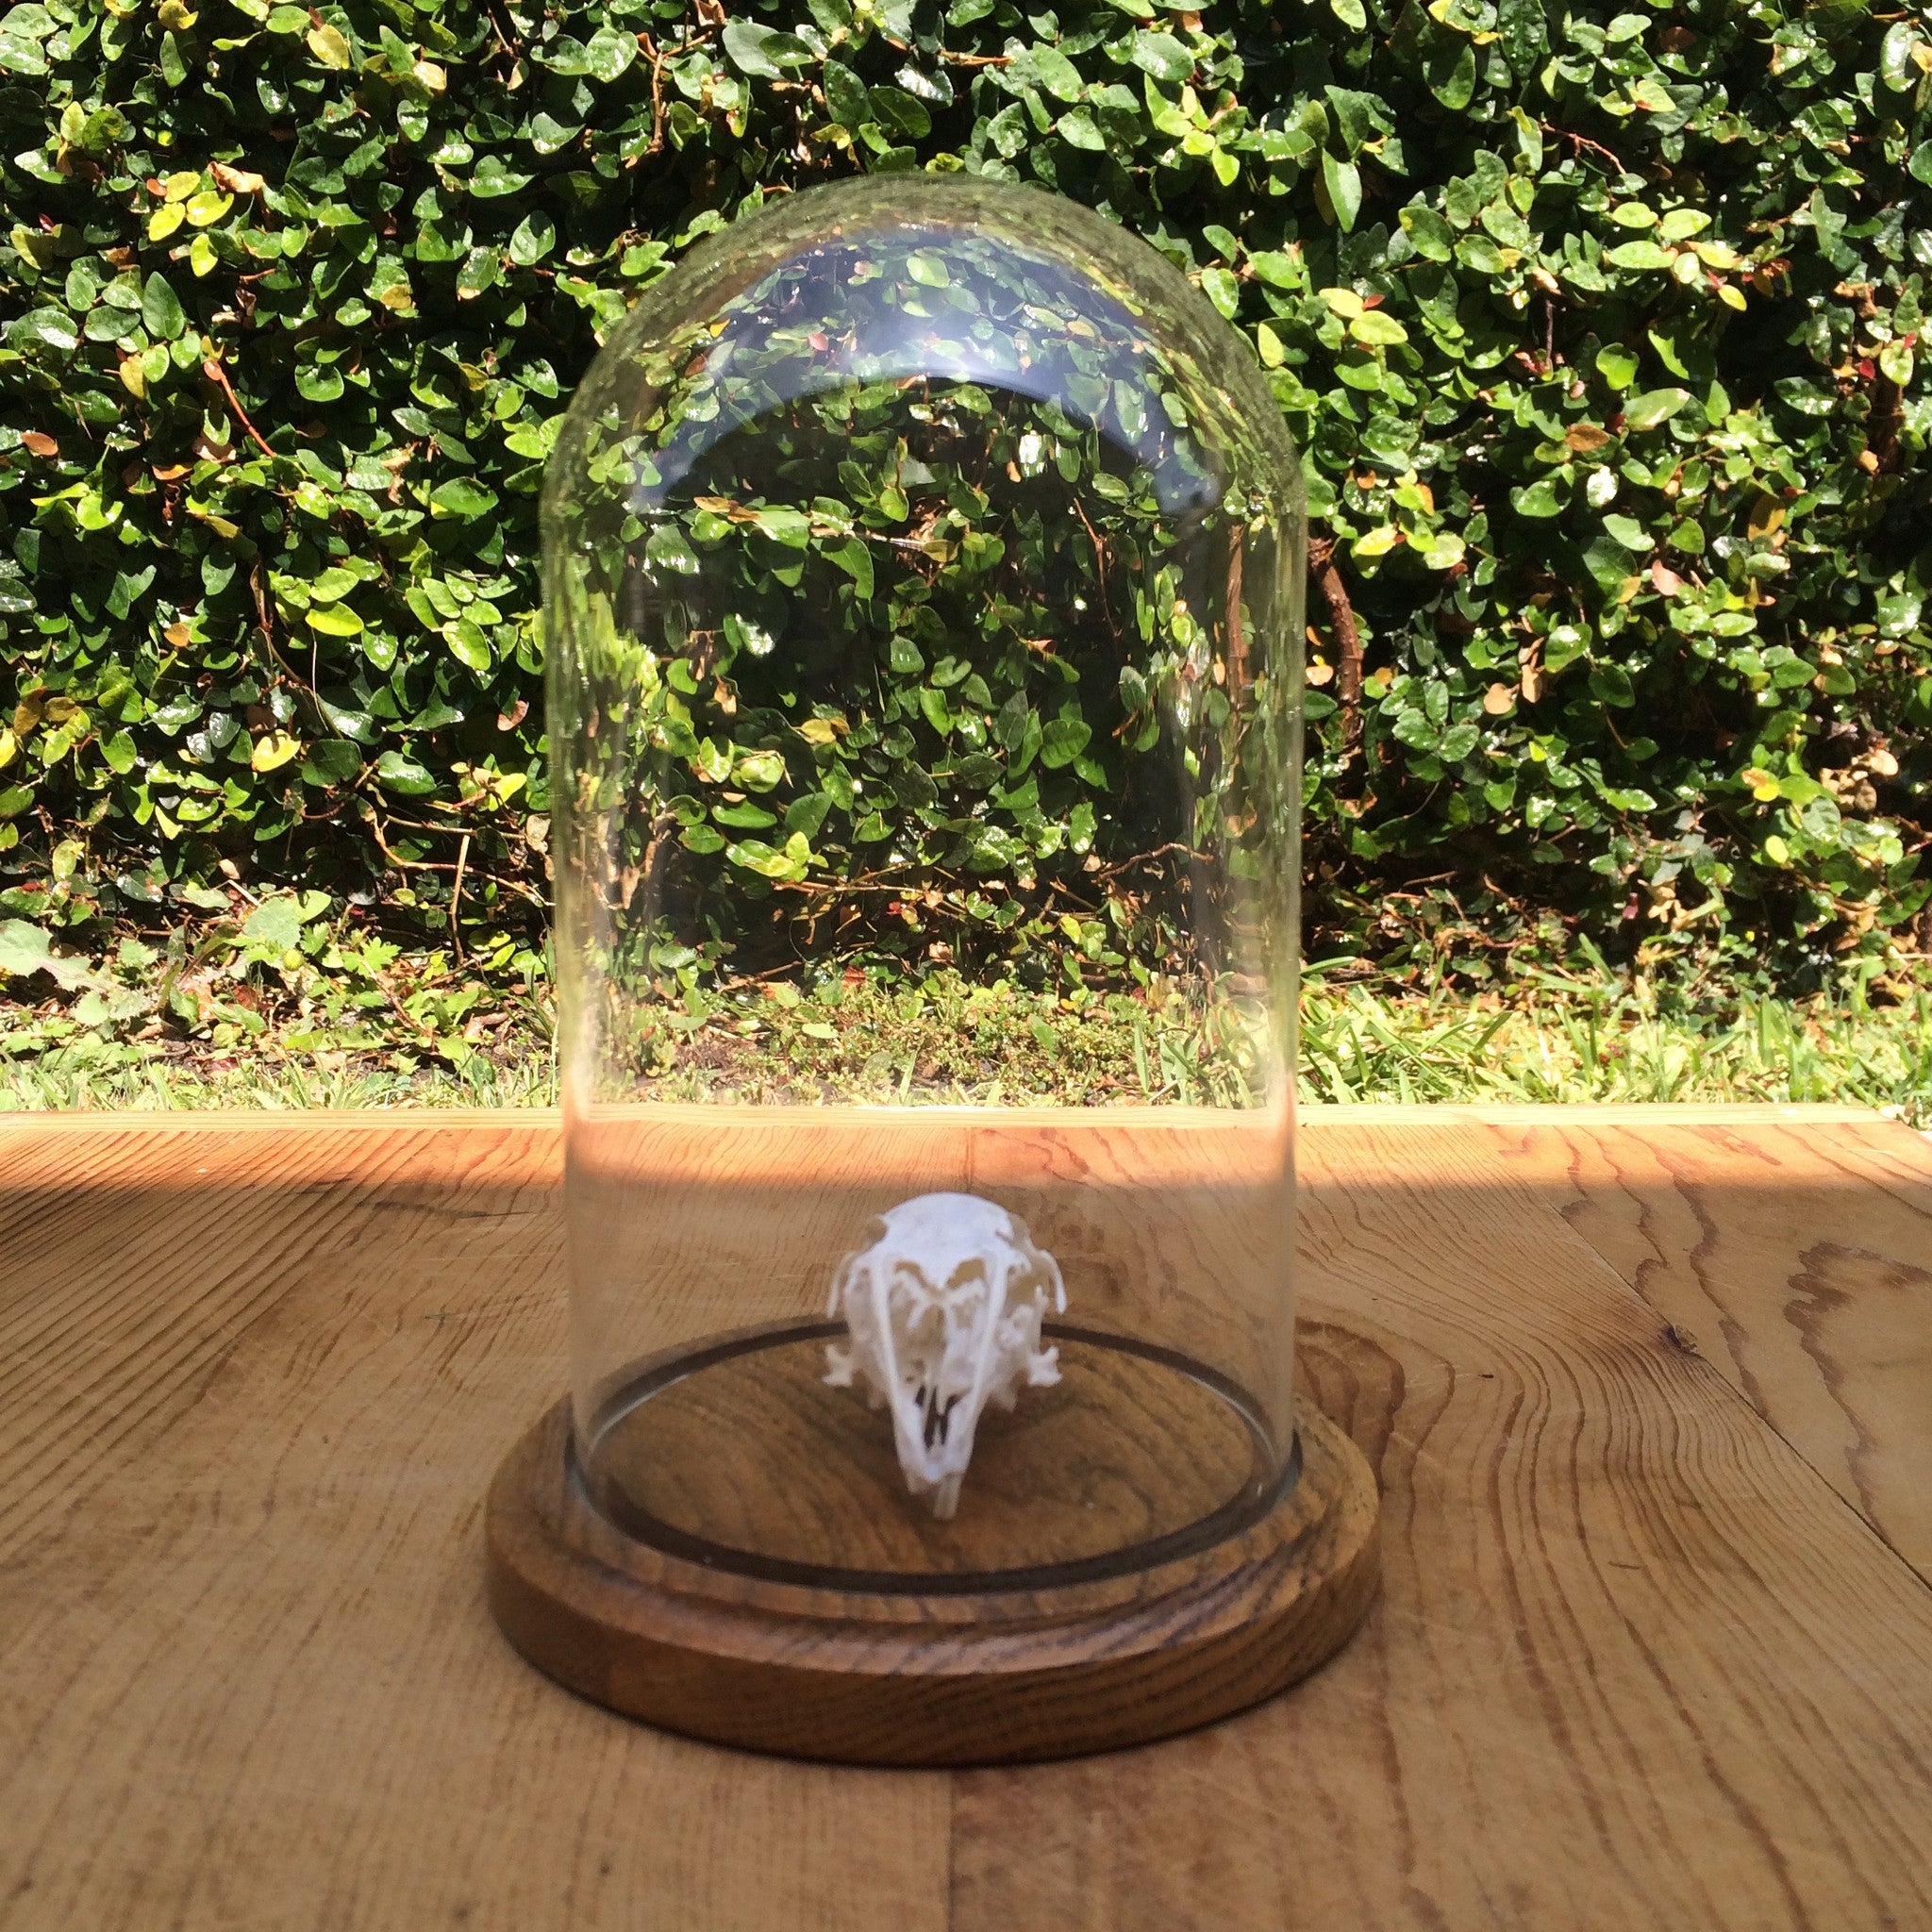 skull under glass dome